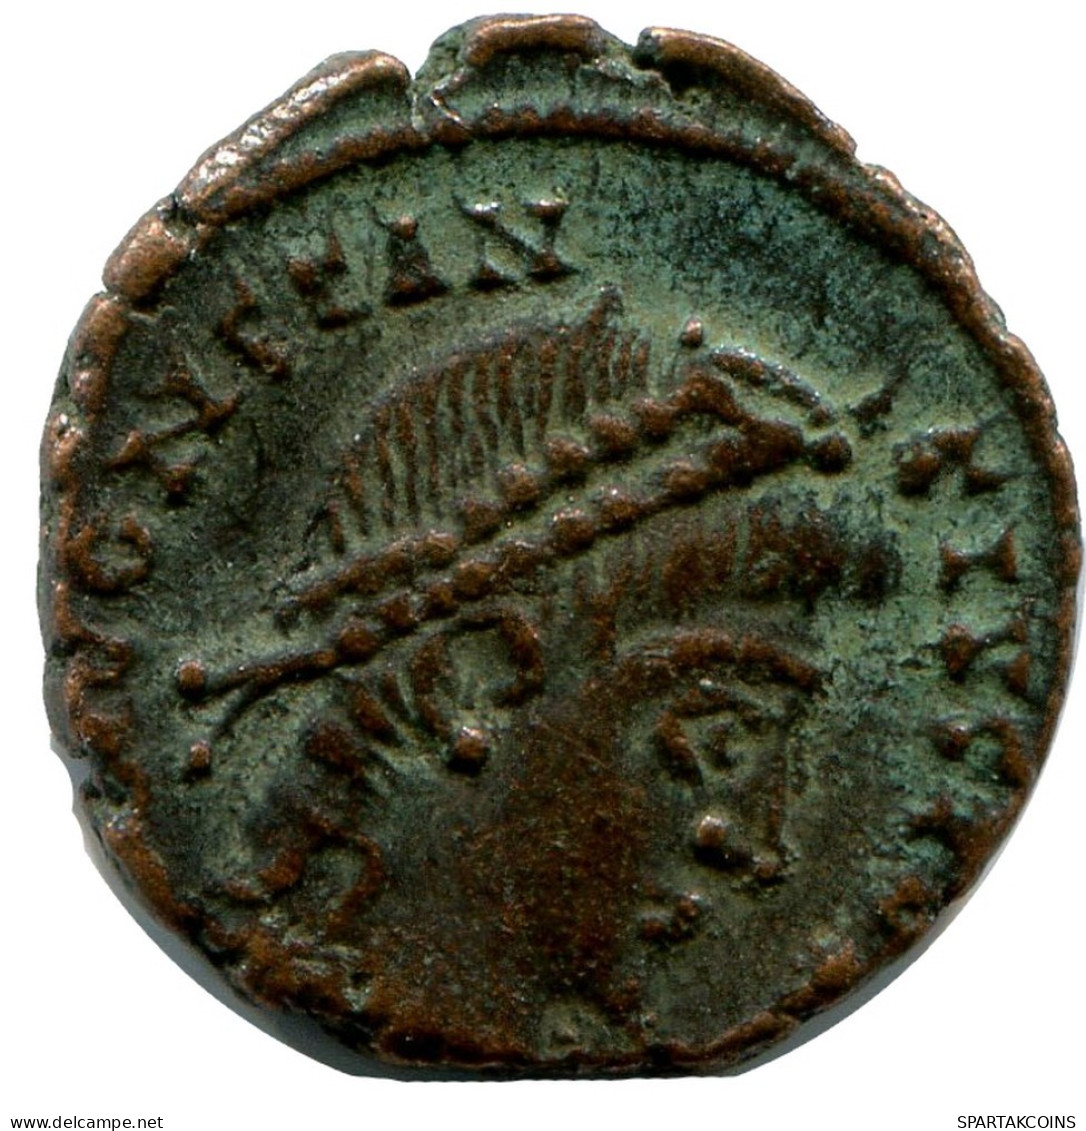 CONSTANTIUS II MINTED IN ALEKSANDRIA FOUND IN IHNASYAH HOARD #ANC10239.14.U.A - El Impero Christiano (307 / 363)